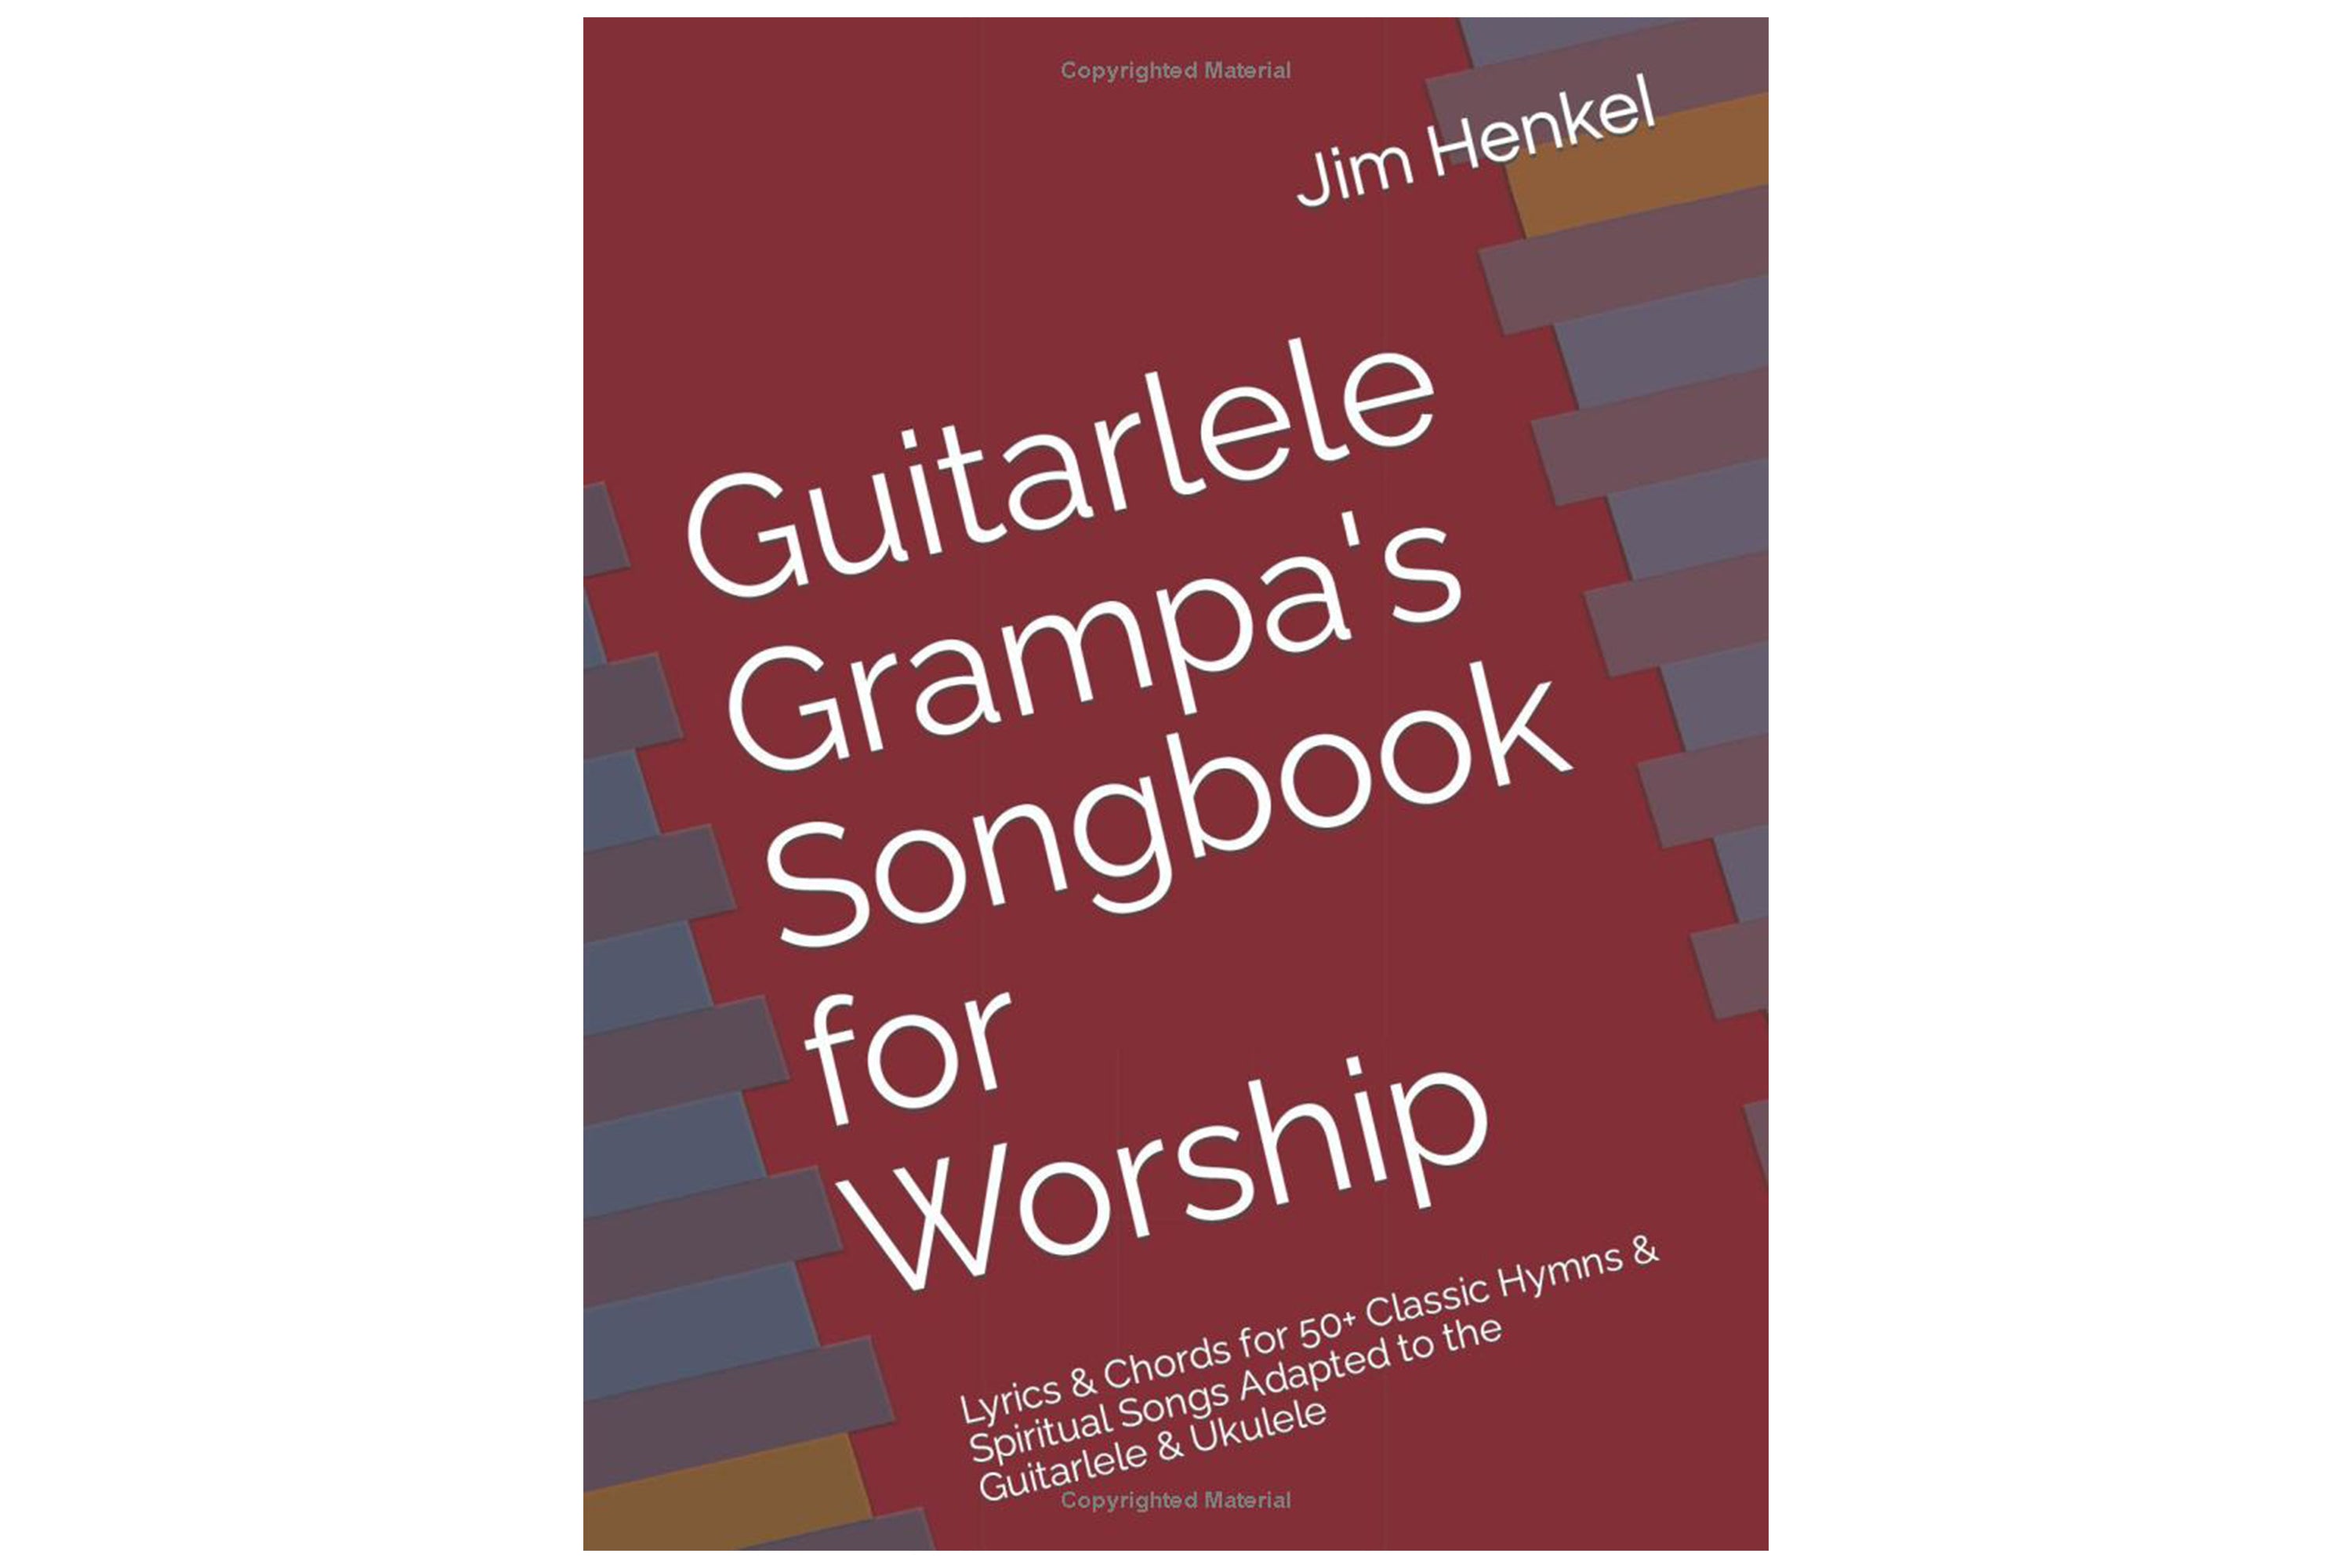 Guitarlele Grampa's Songbook for Worship